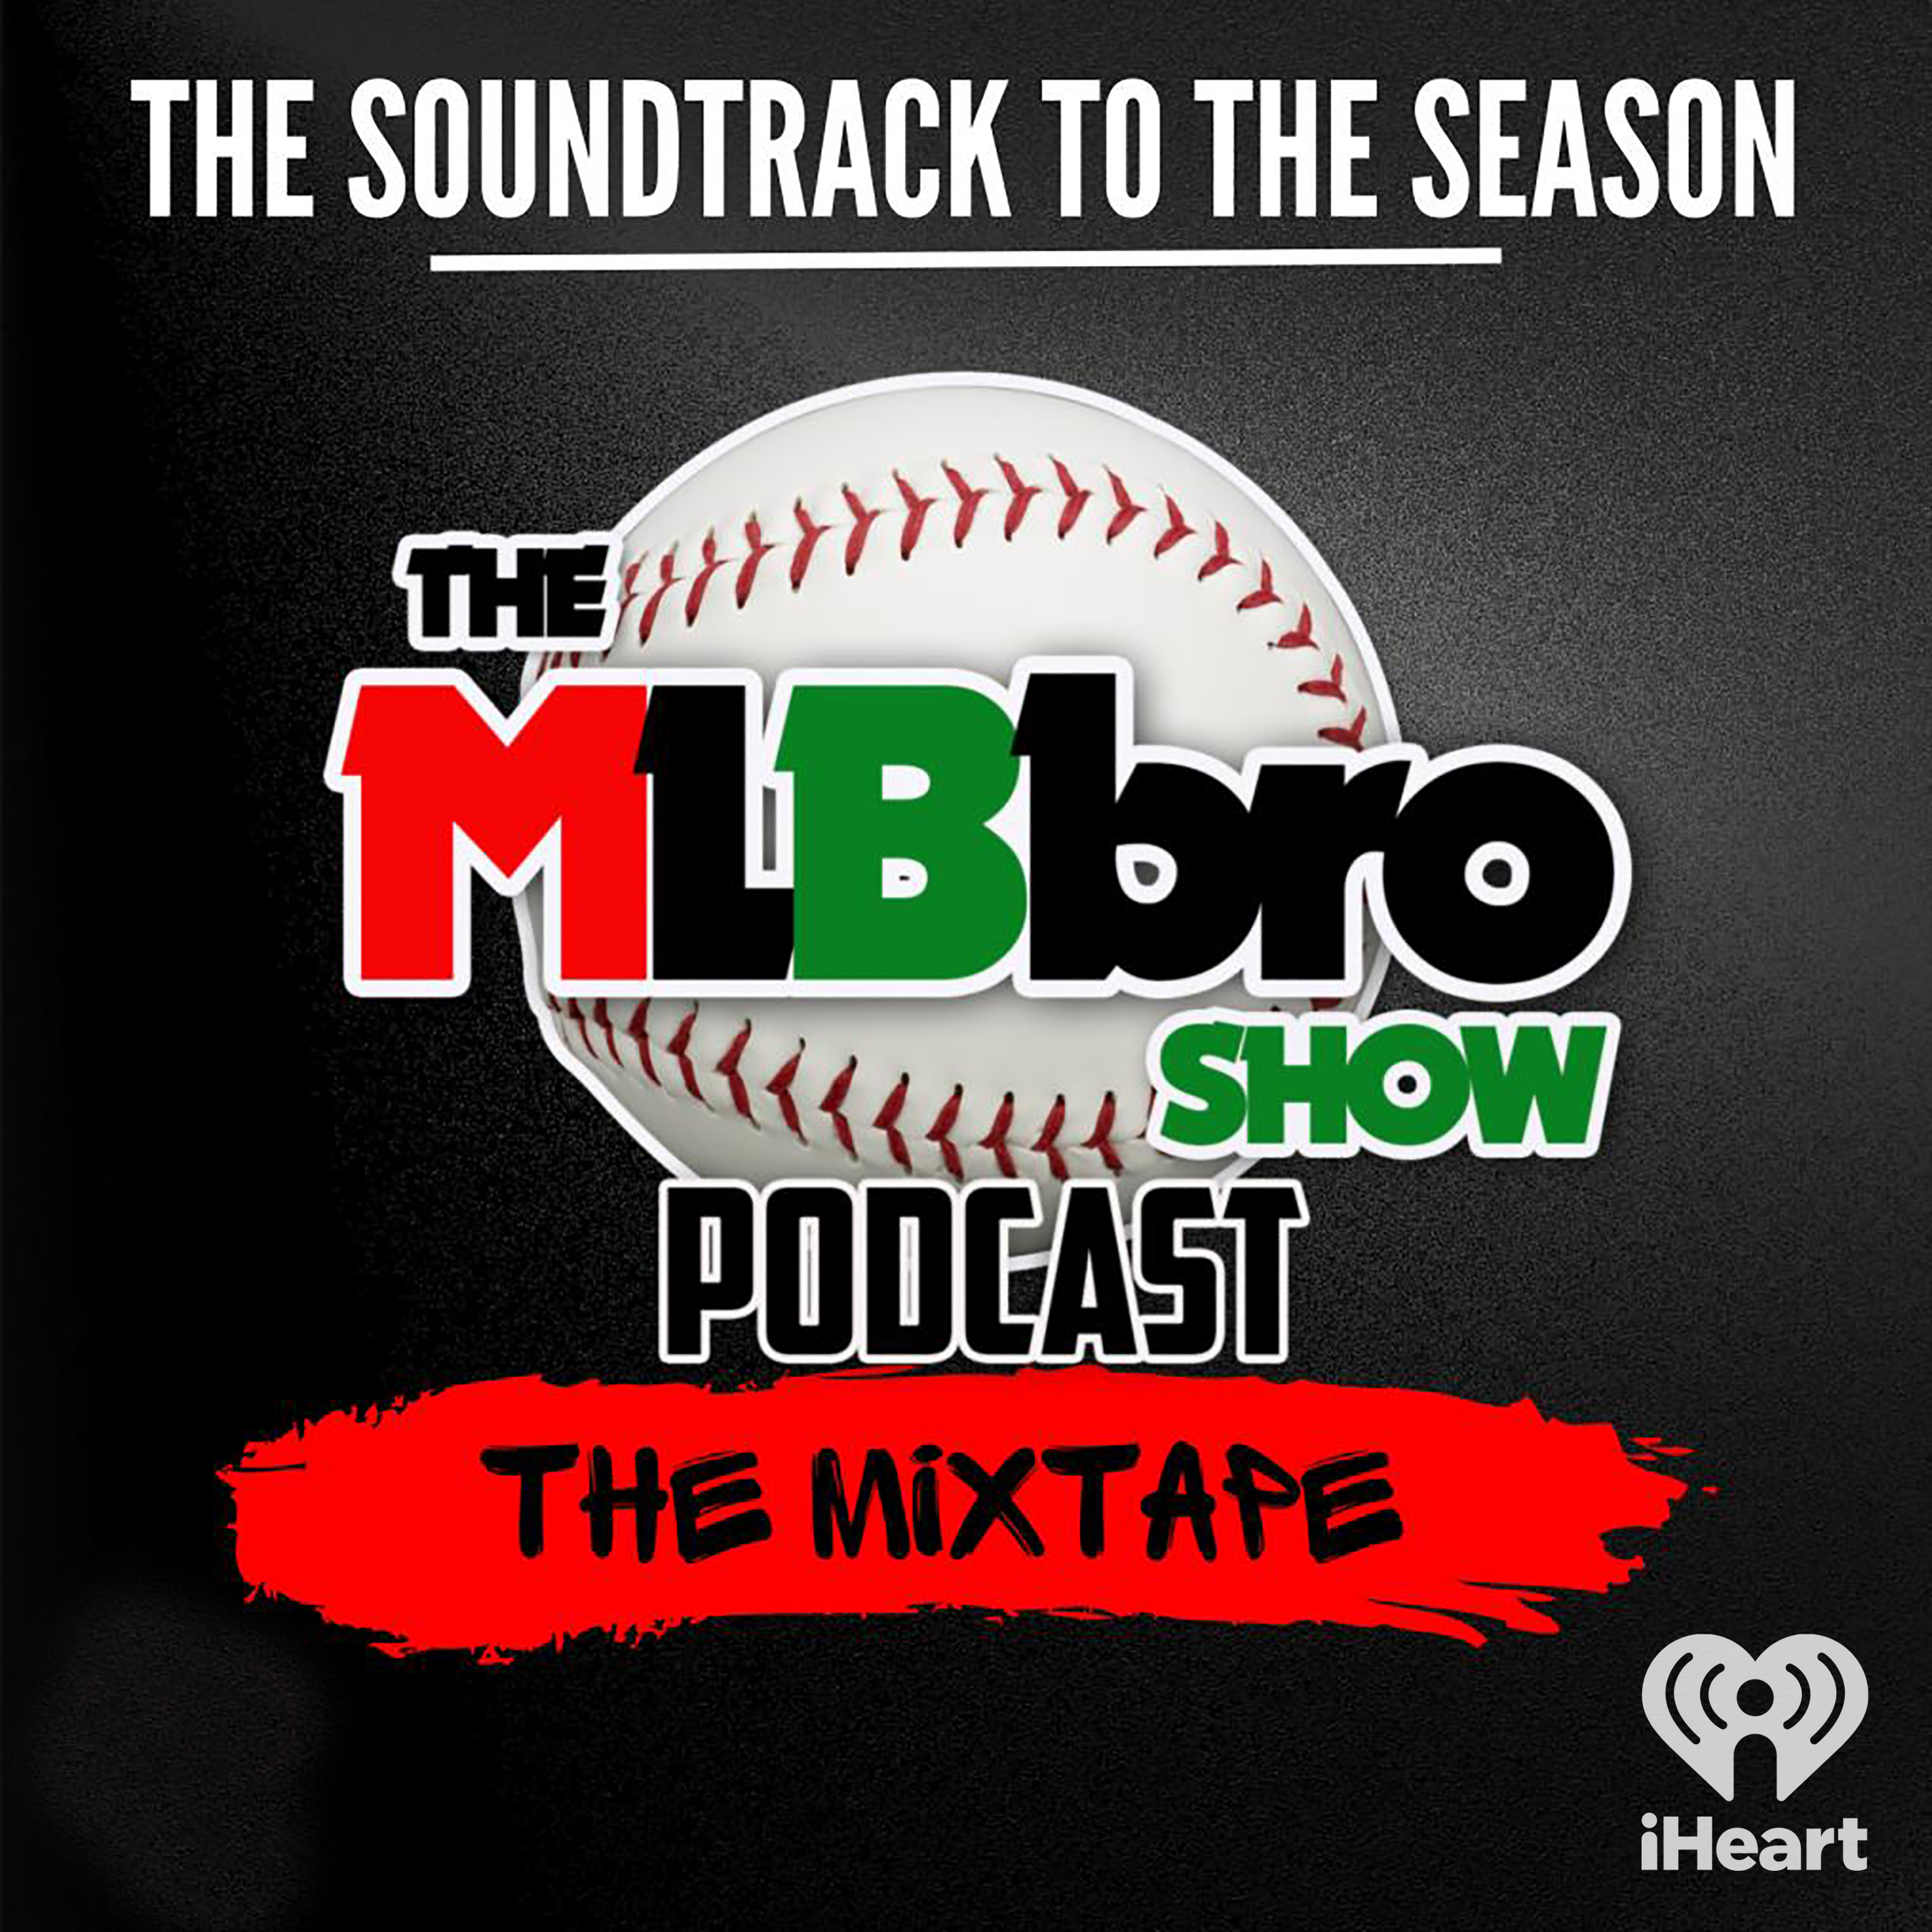 MLBbro Show Podcast The Mixtape Vol 3 Episode 17